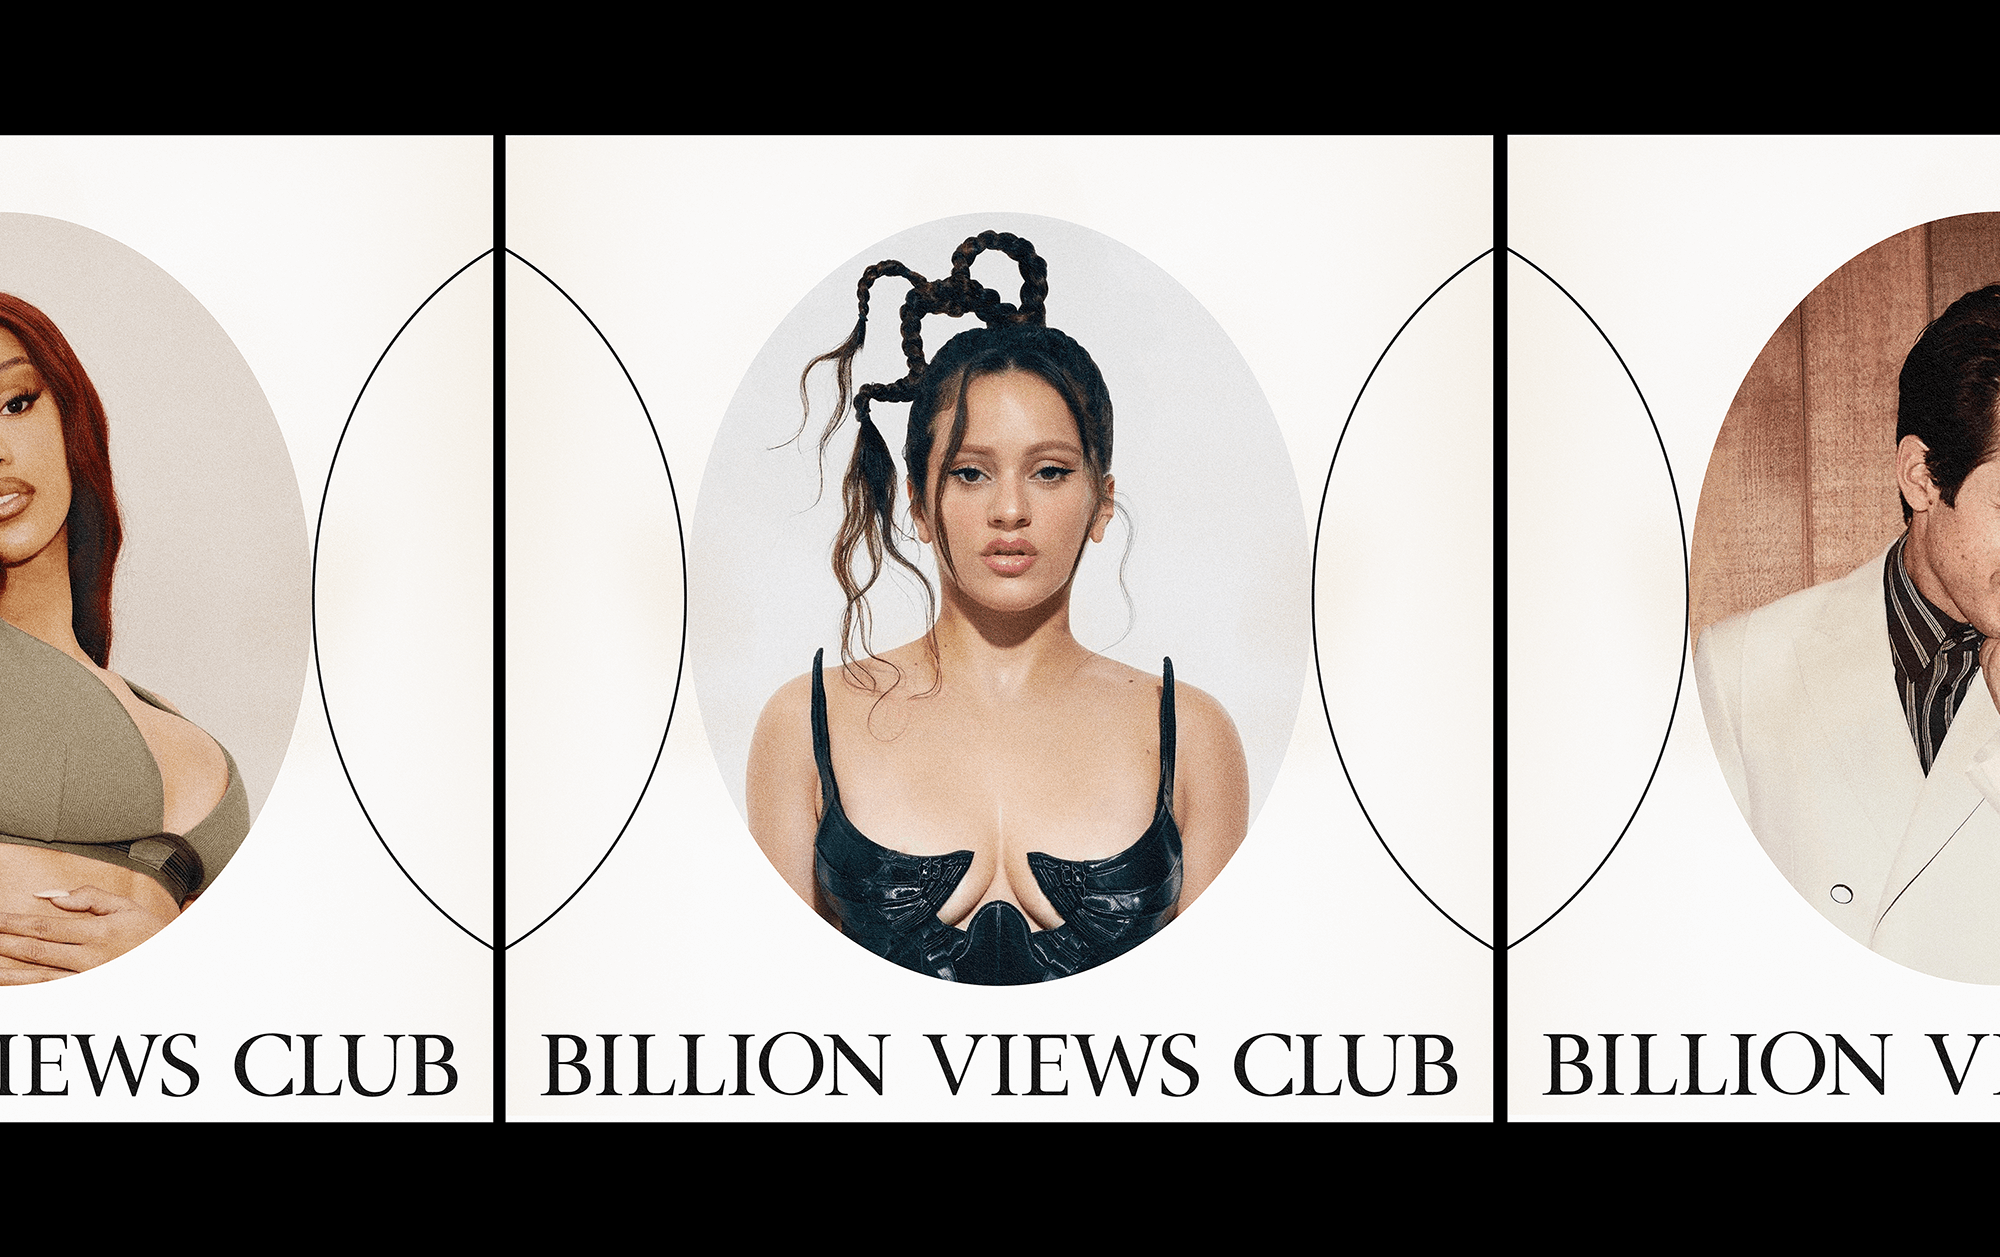 Billion-Views-Club-2-5 _2000ns